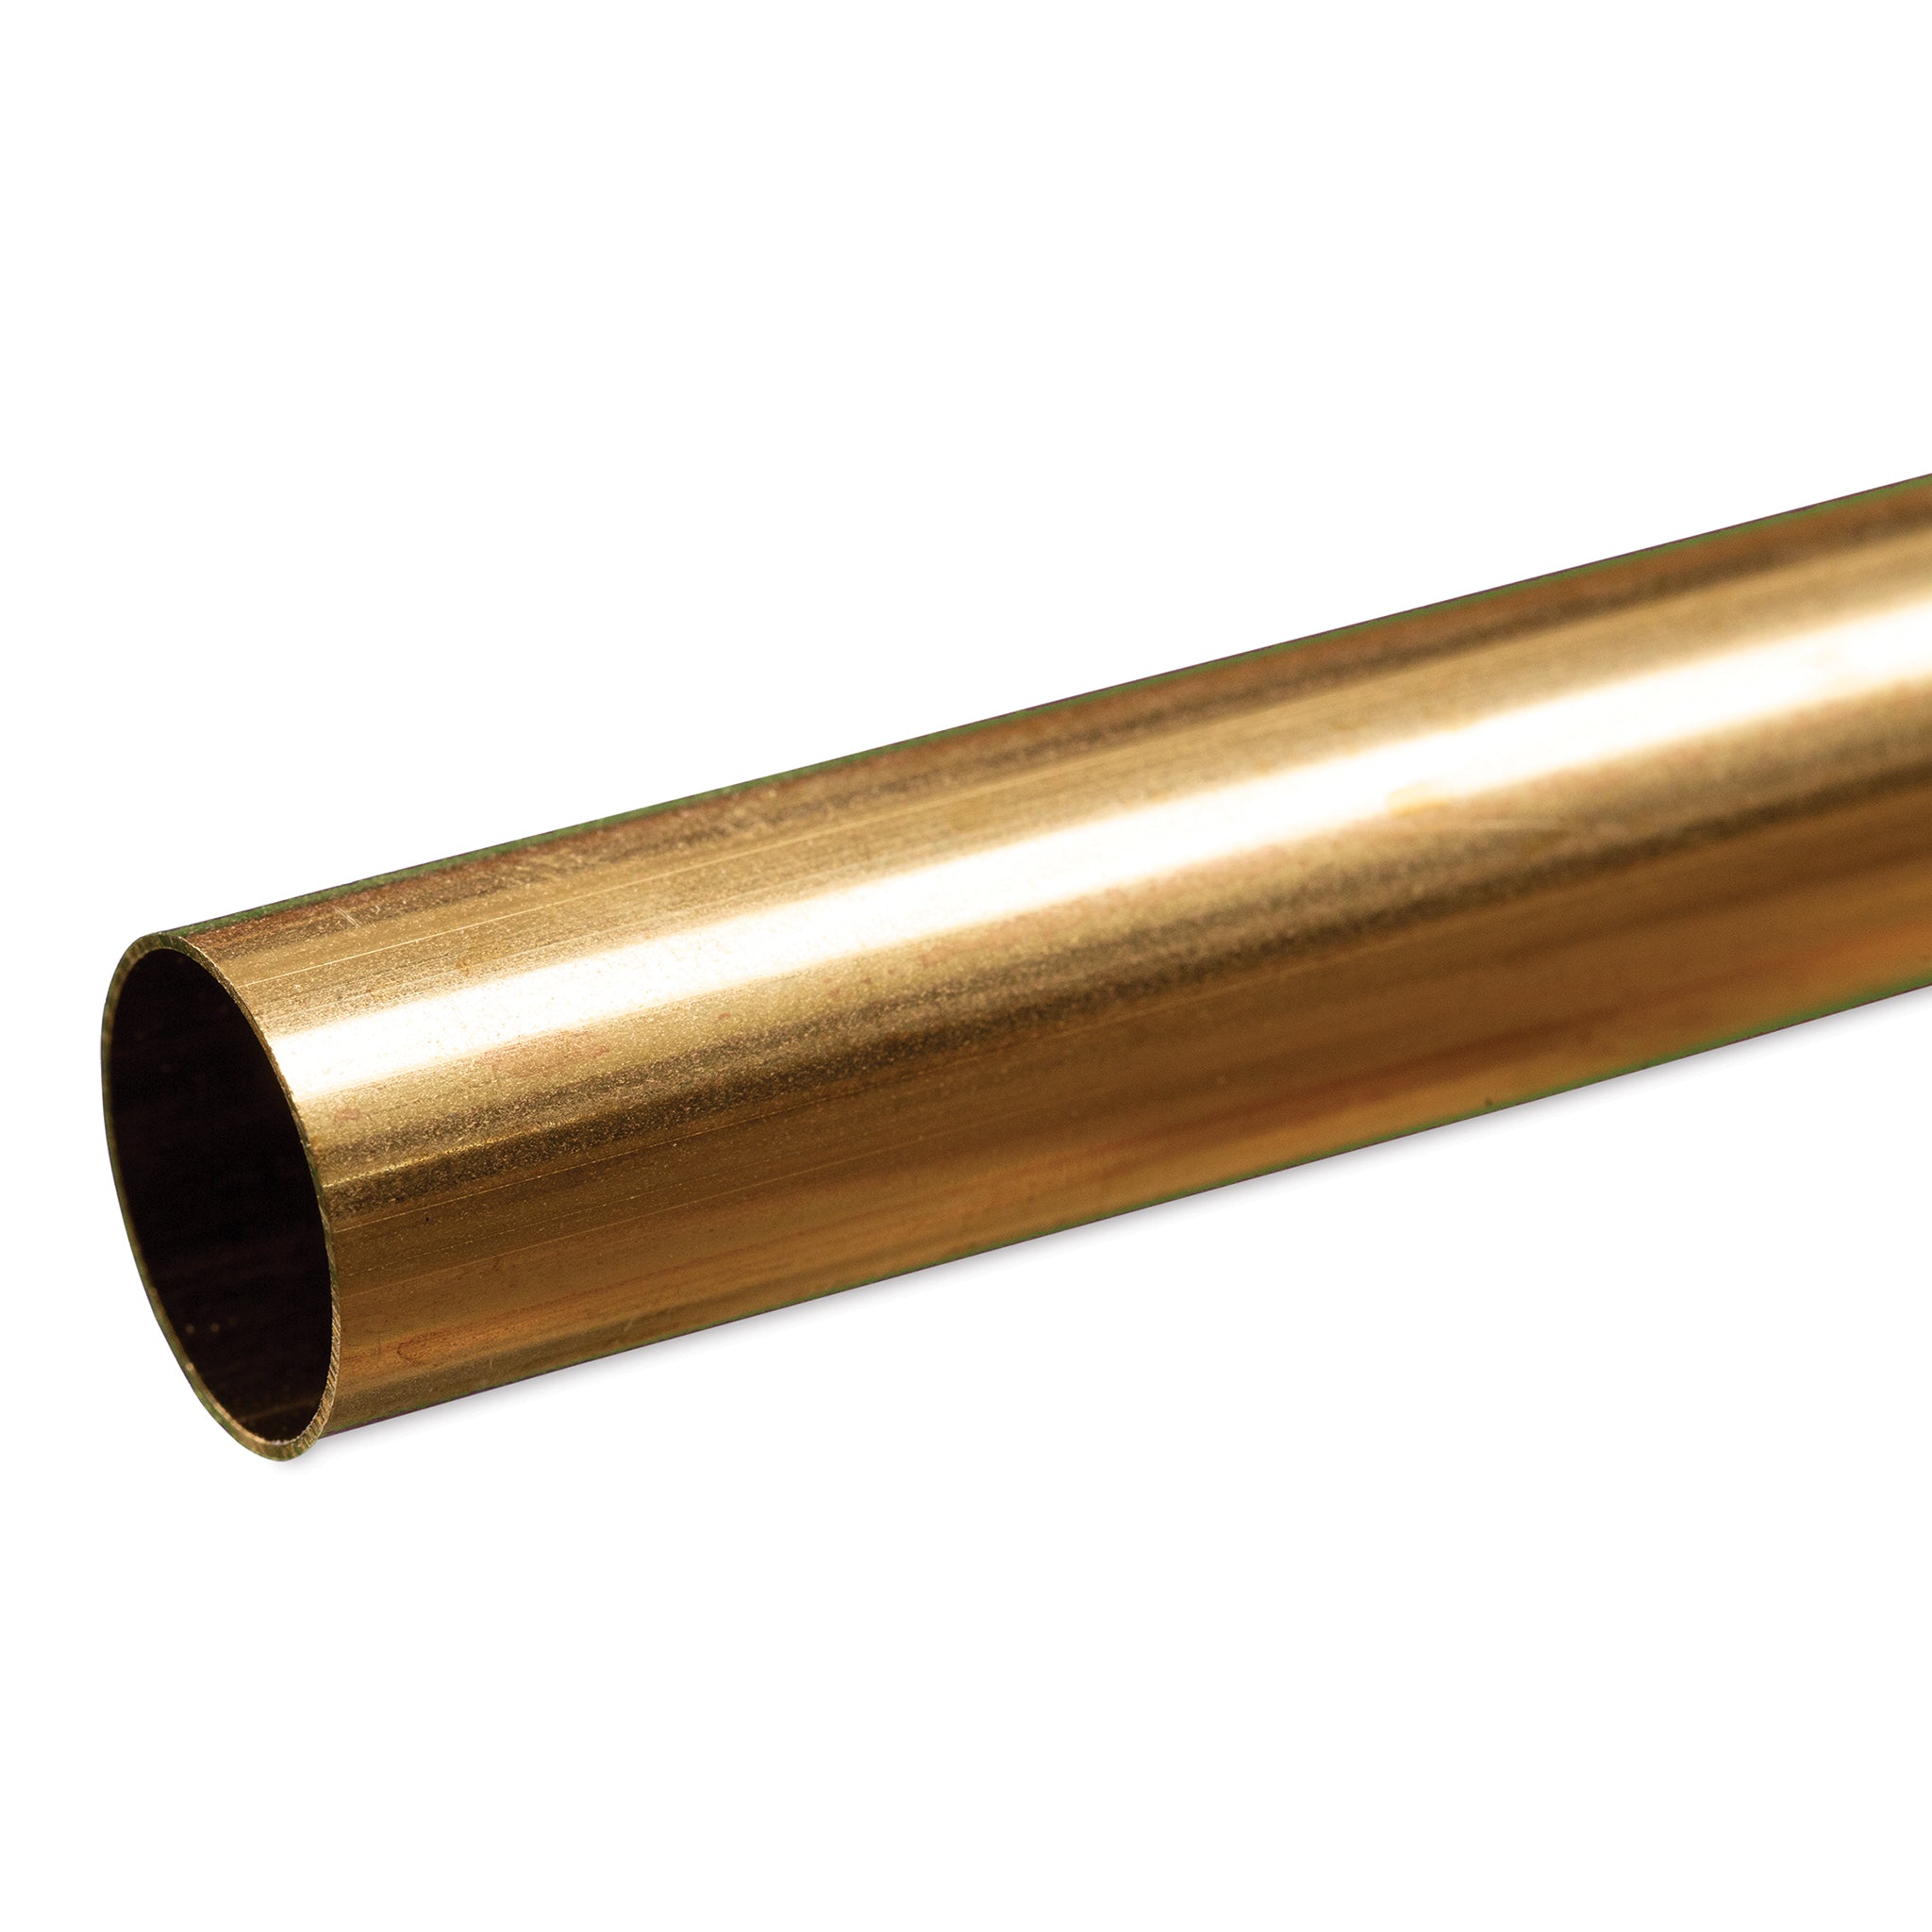 K&S Metals 8139 Round Brass Tube 1/2" OD x 0.014" Wall x 12" Long (1 Piece)